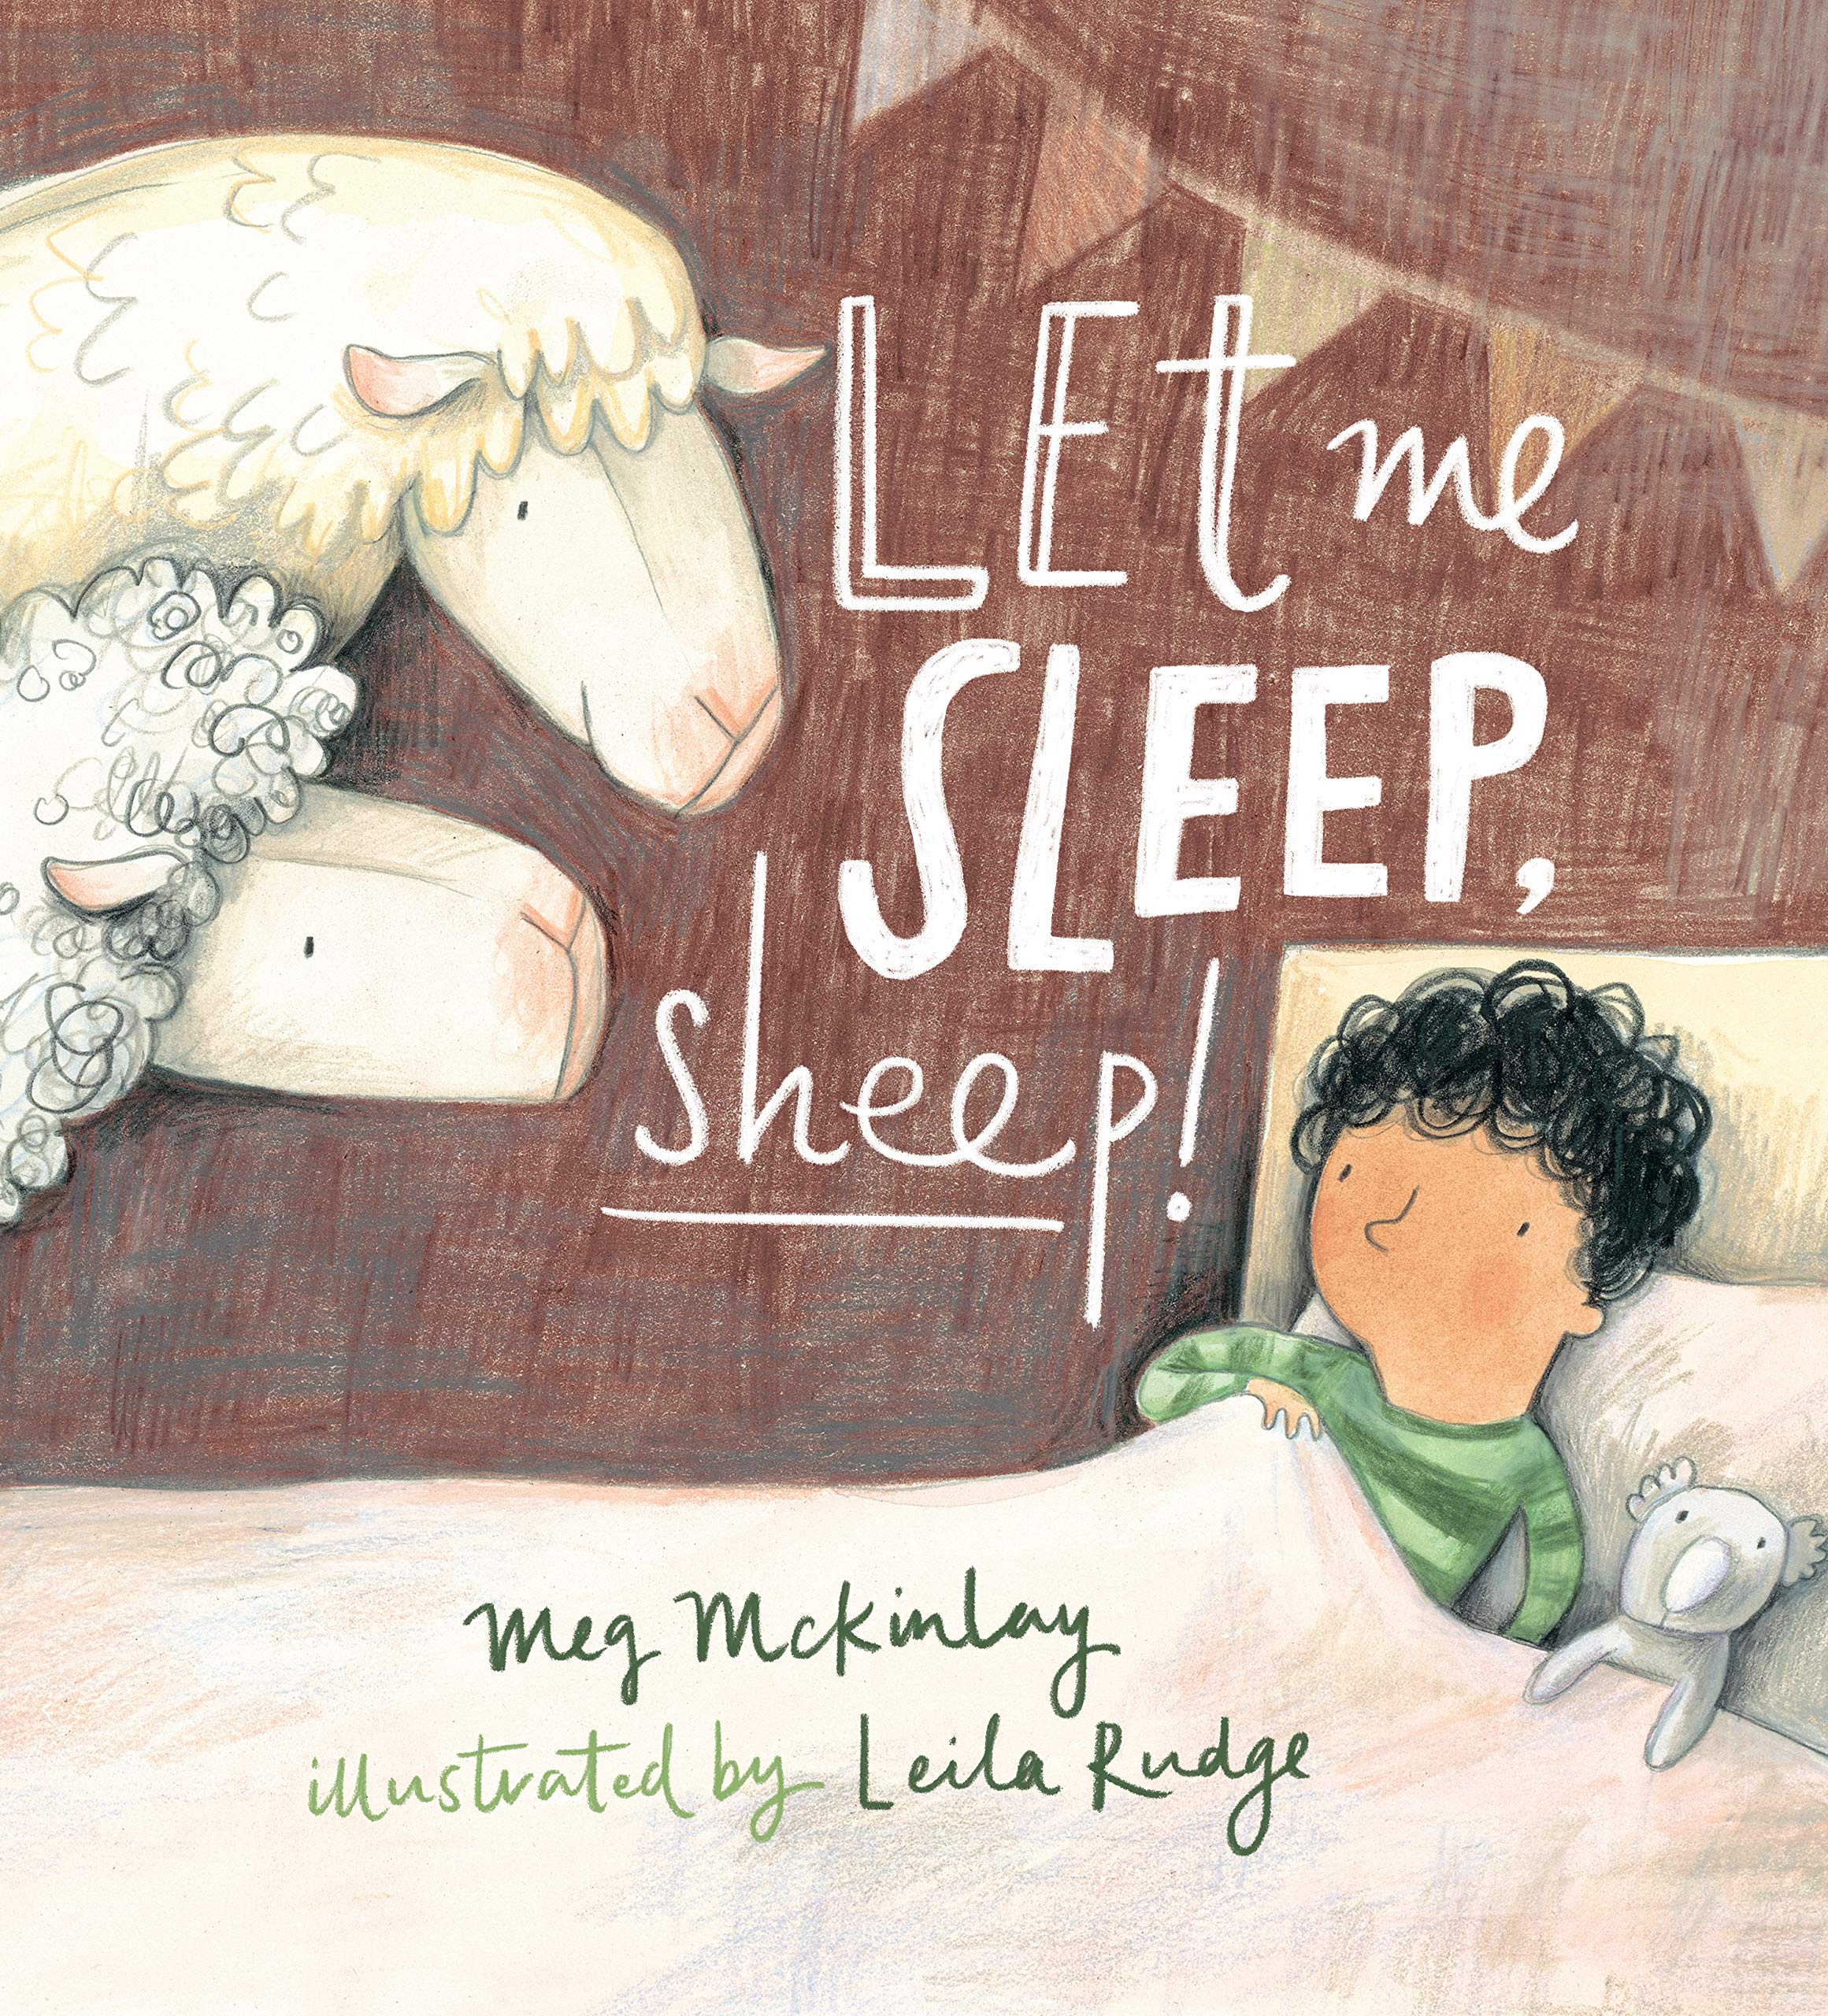 Let Me Sleep, Sheep! by Meg McKinlay - Me Books Asia Store